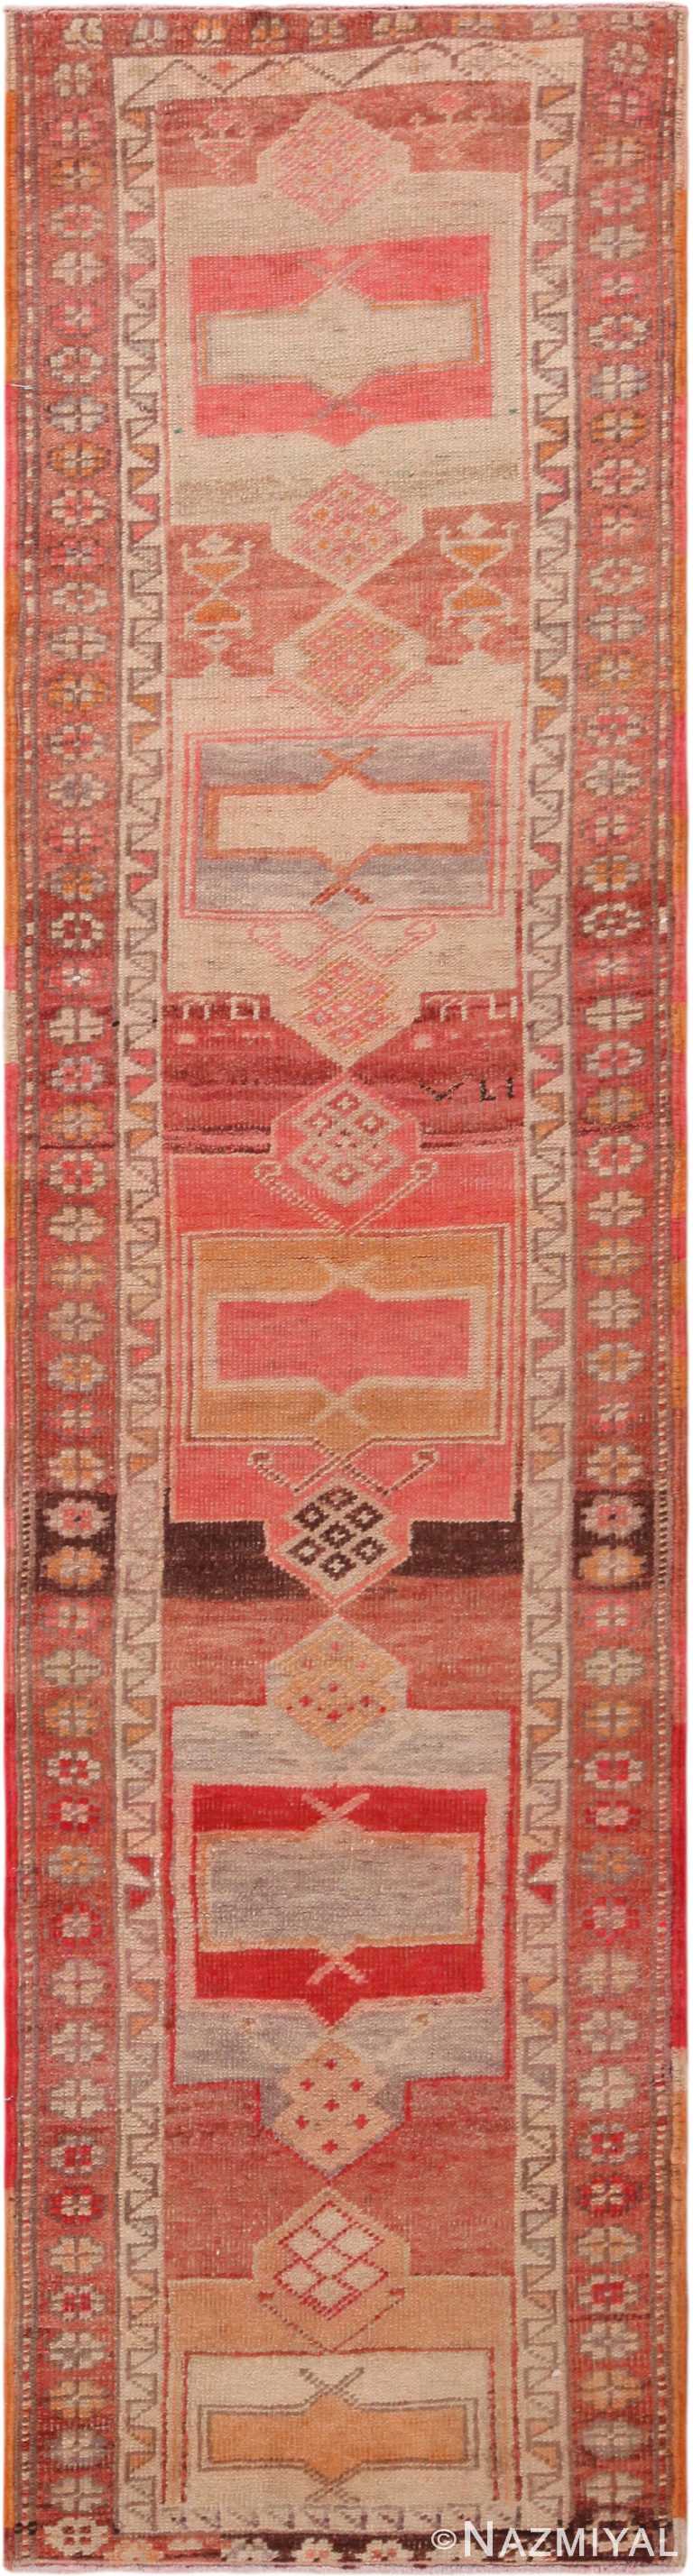 Antique Persian Kurdish Runner Rug 72154 by Nazmiyal Antique Rugs